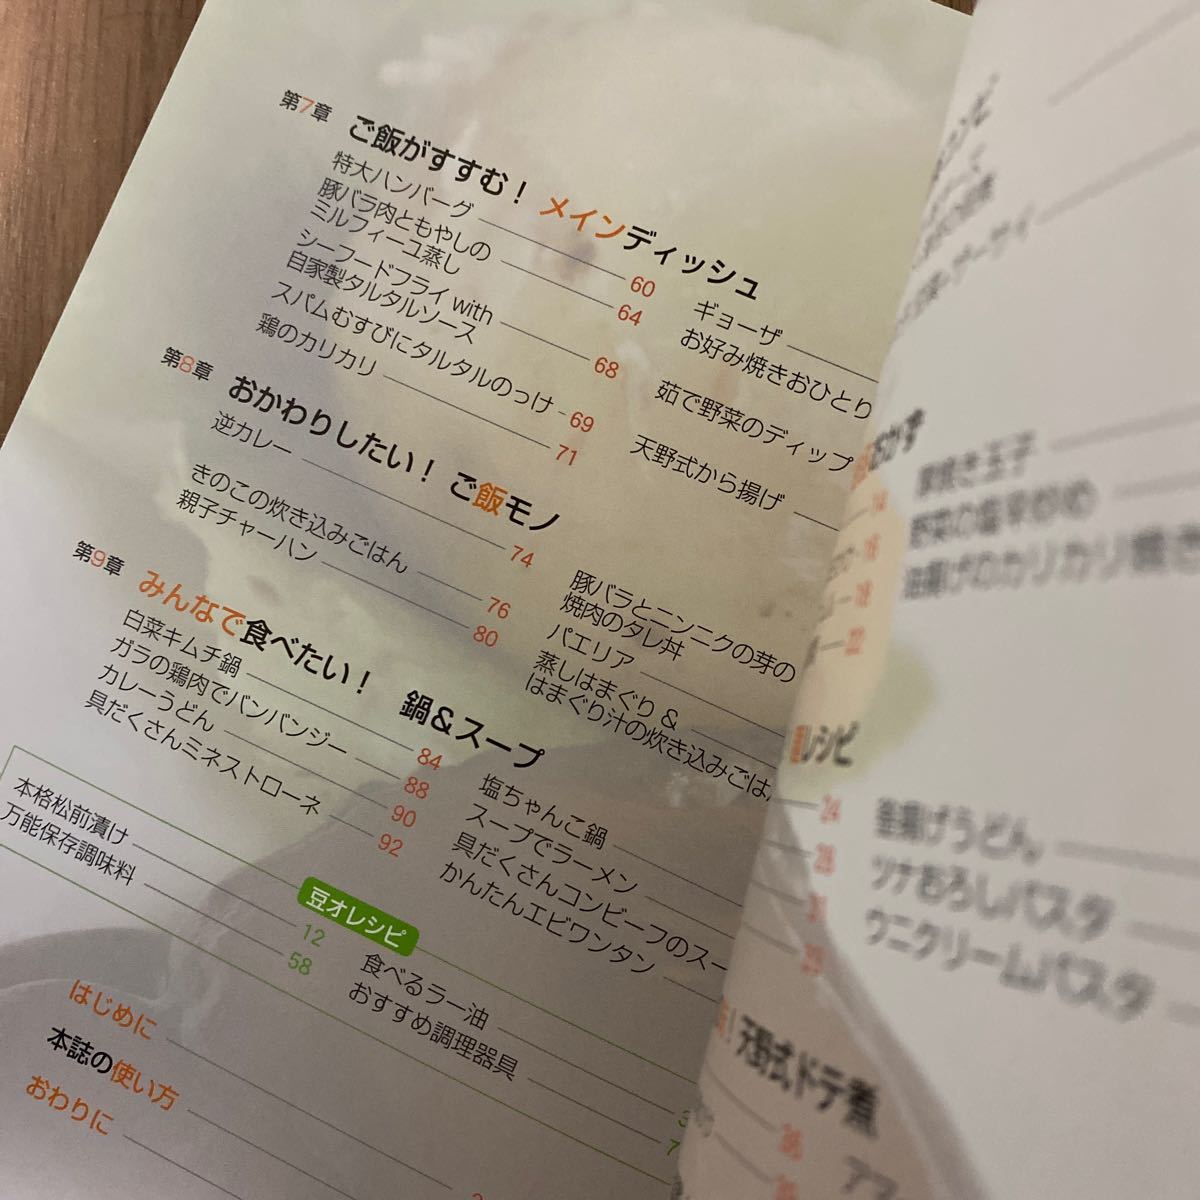 Paypayフリマ オレシピ キャイーン 天野ひろゆき レシピ本